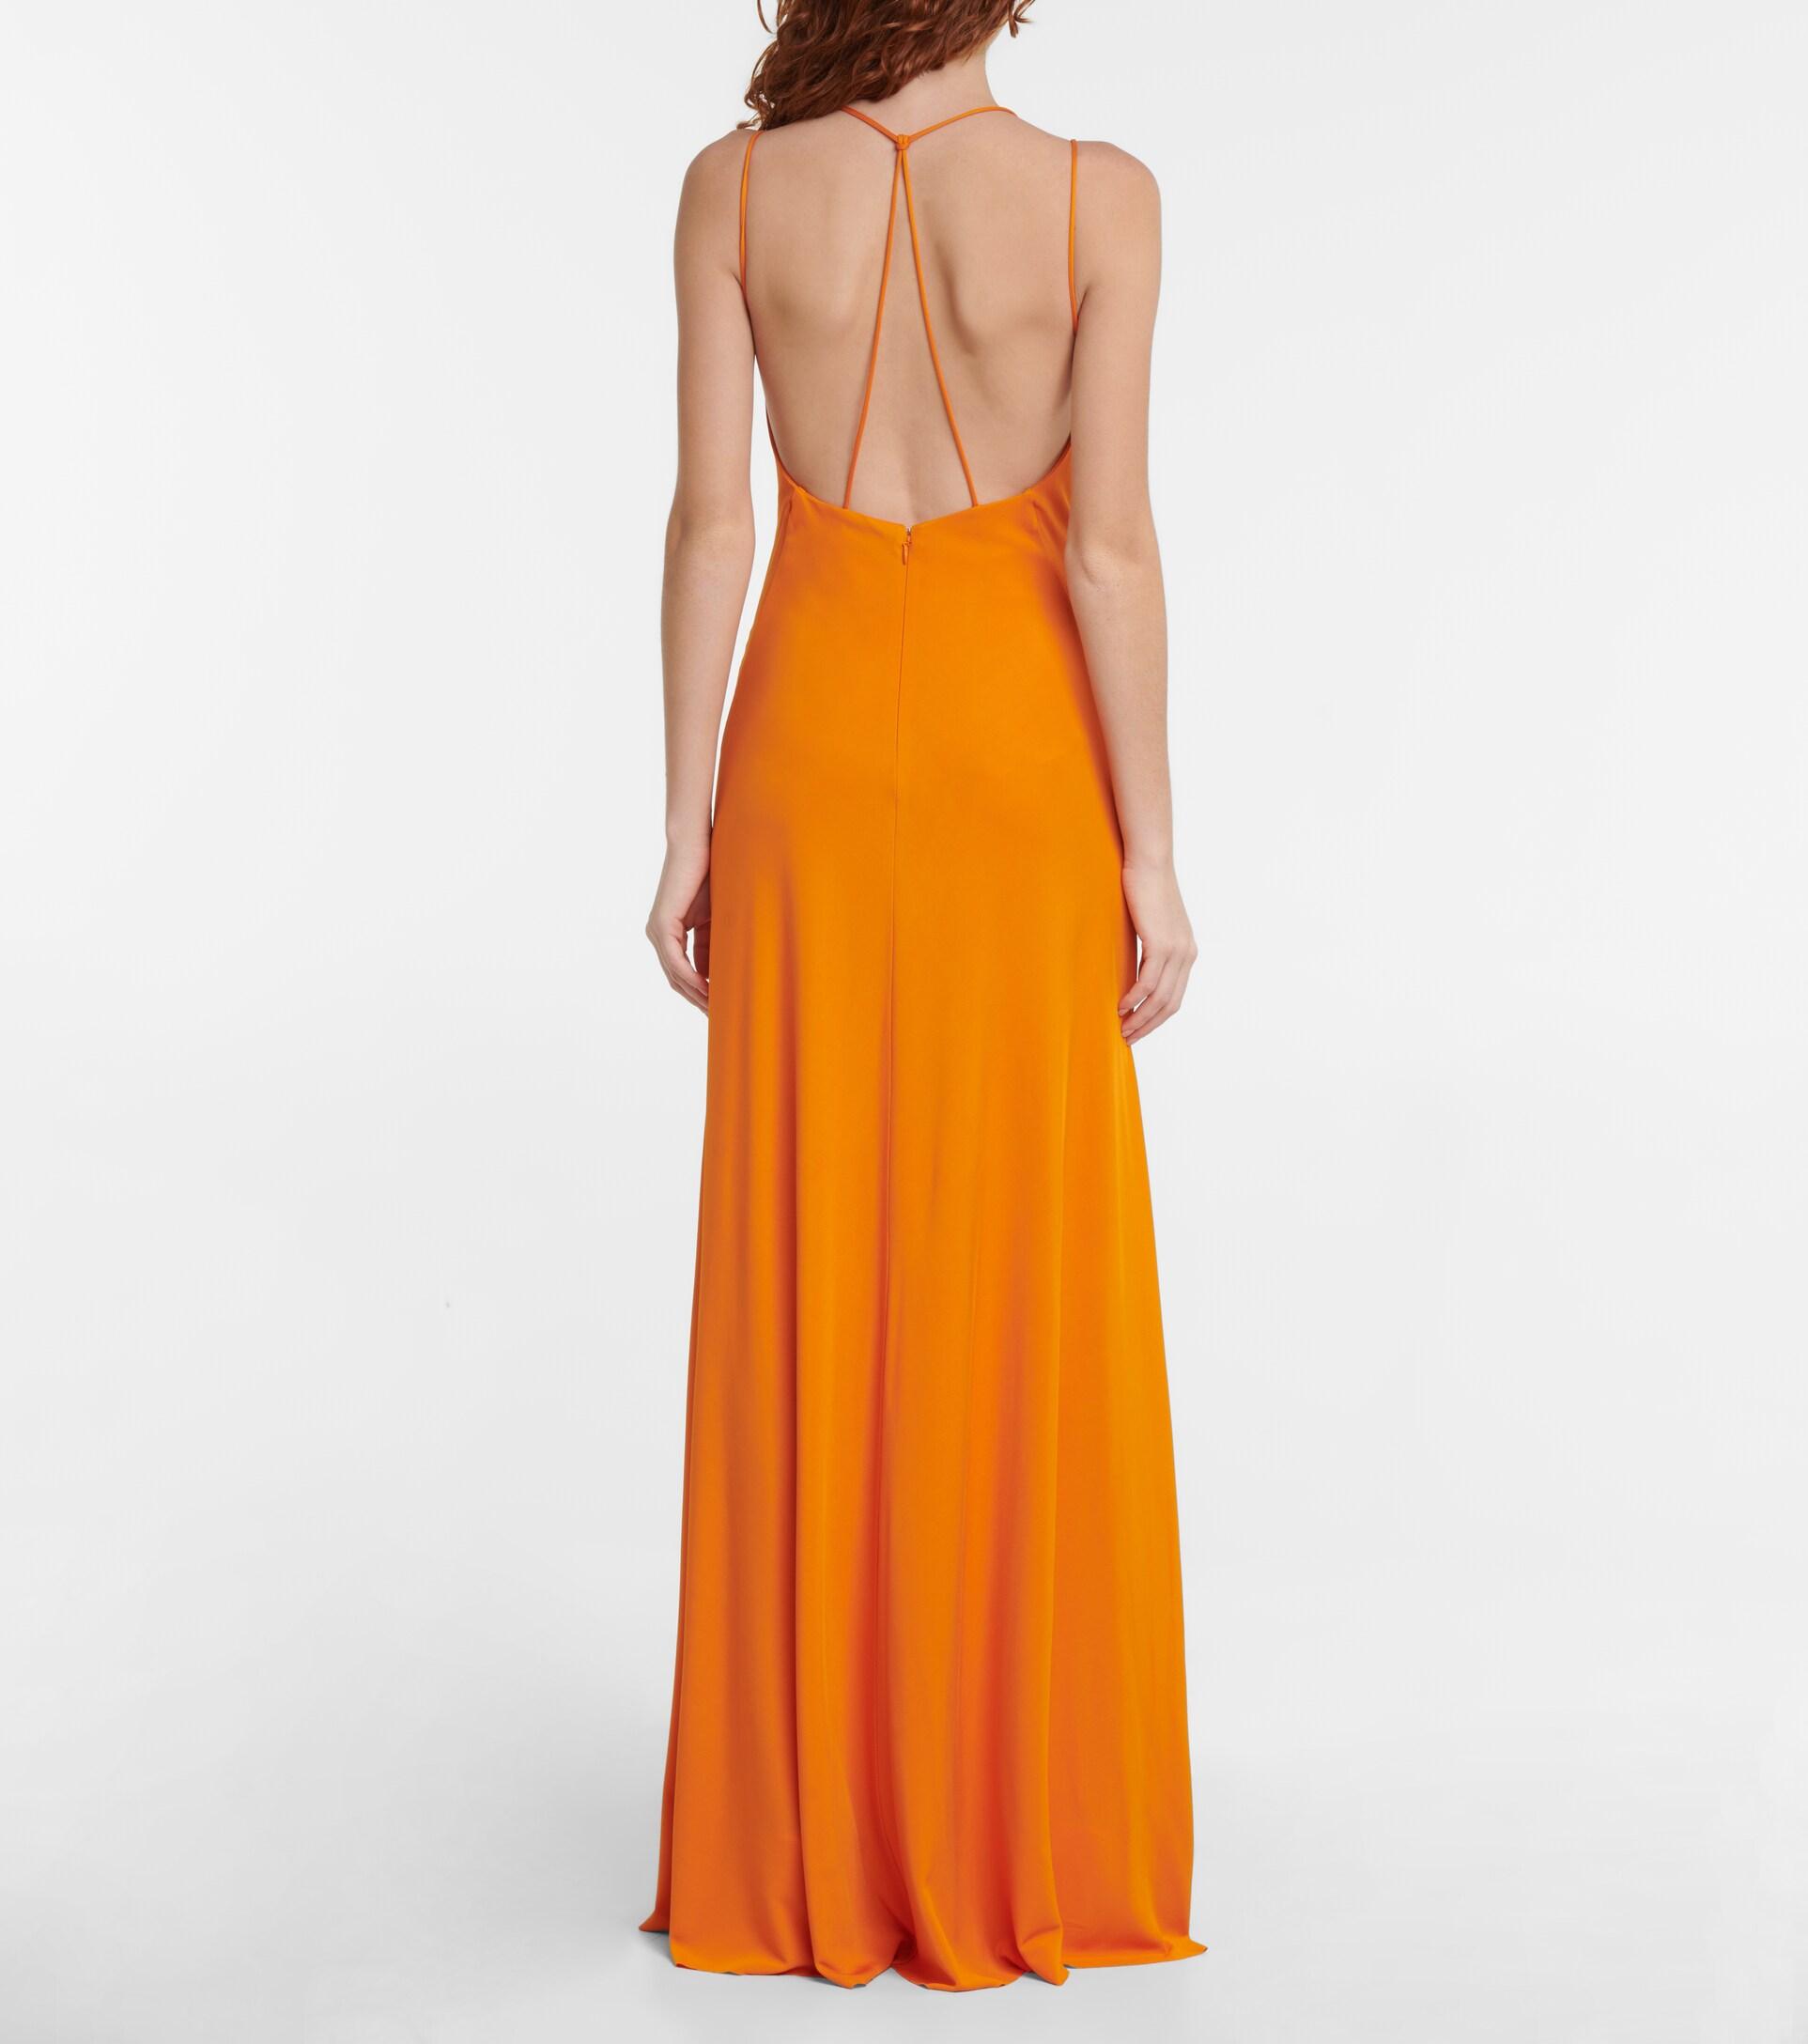 Victoria Beckham Cutout Jersey Maxi Dress in Orange | Lyst